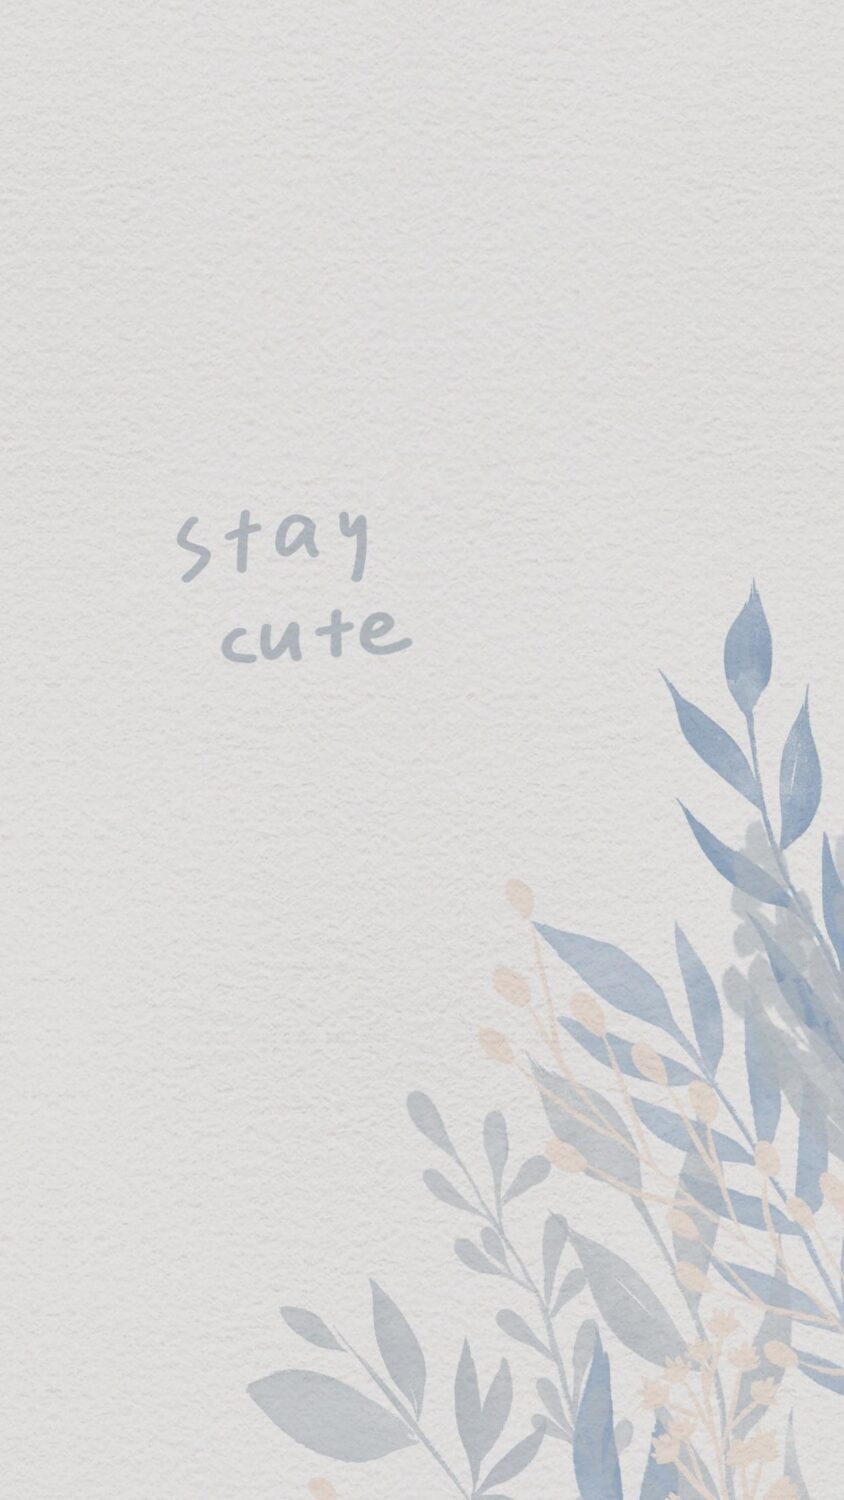 Stay cute